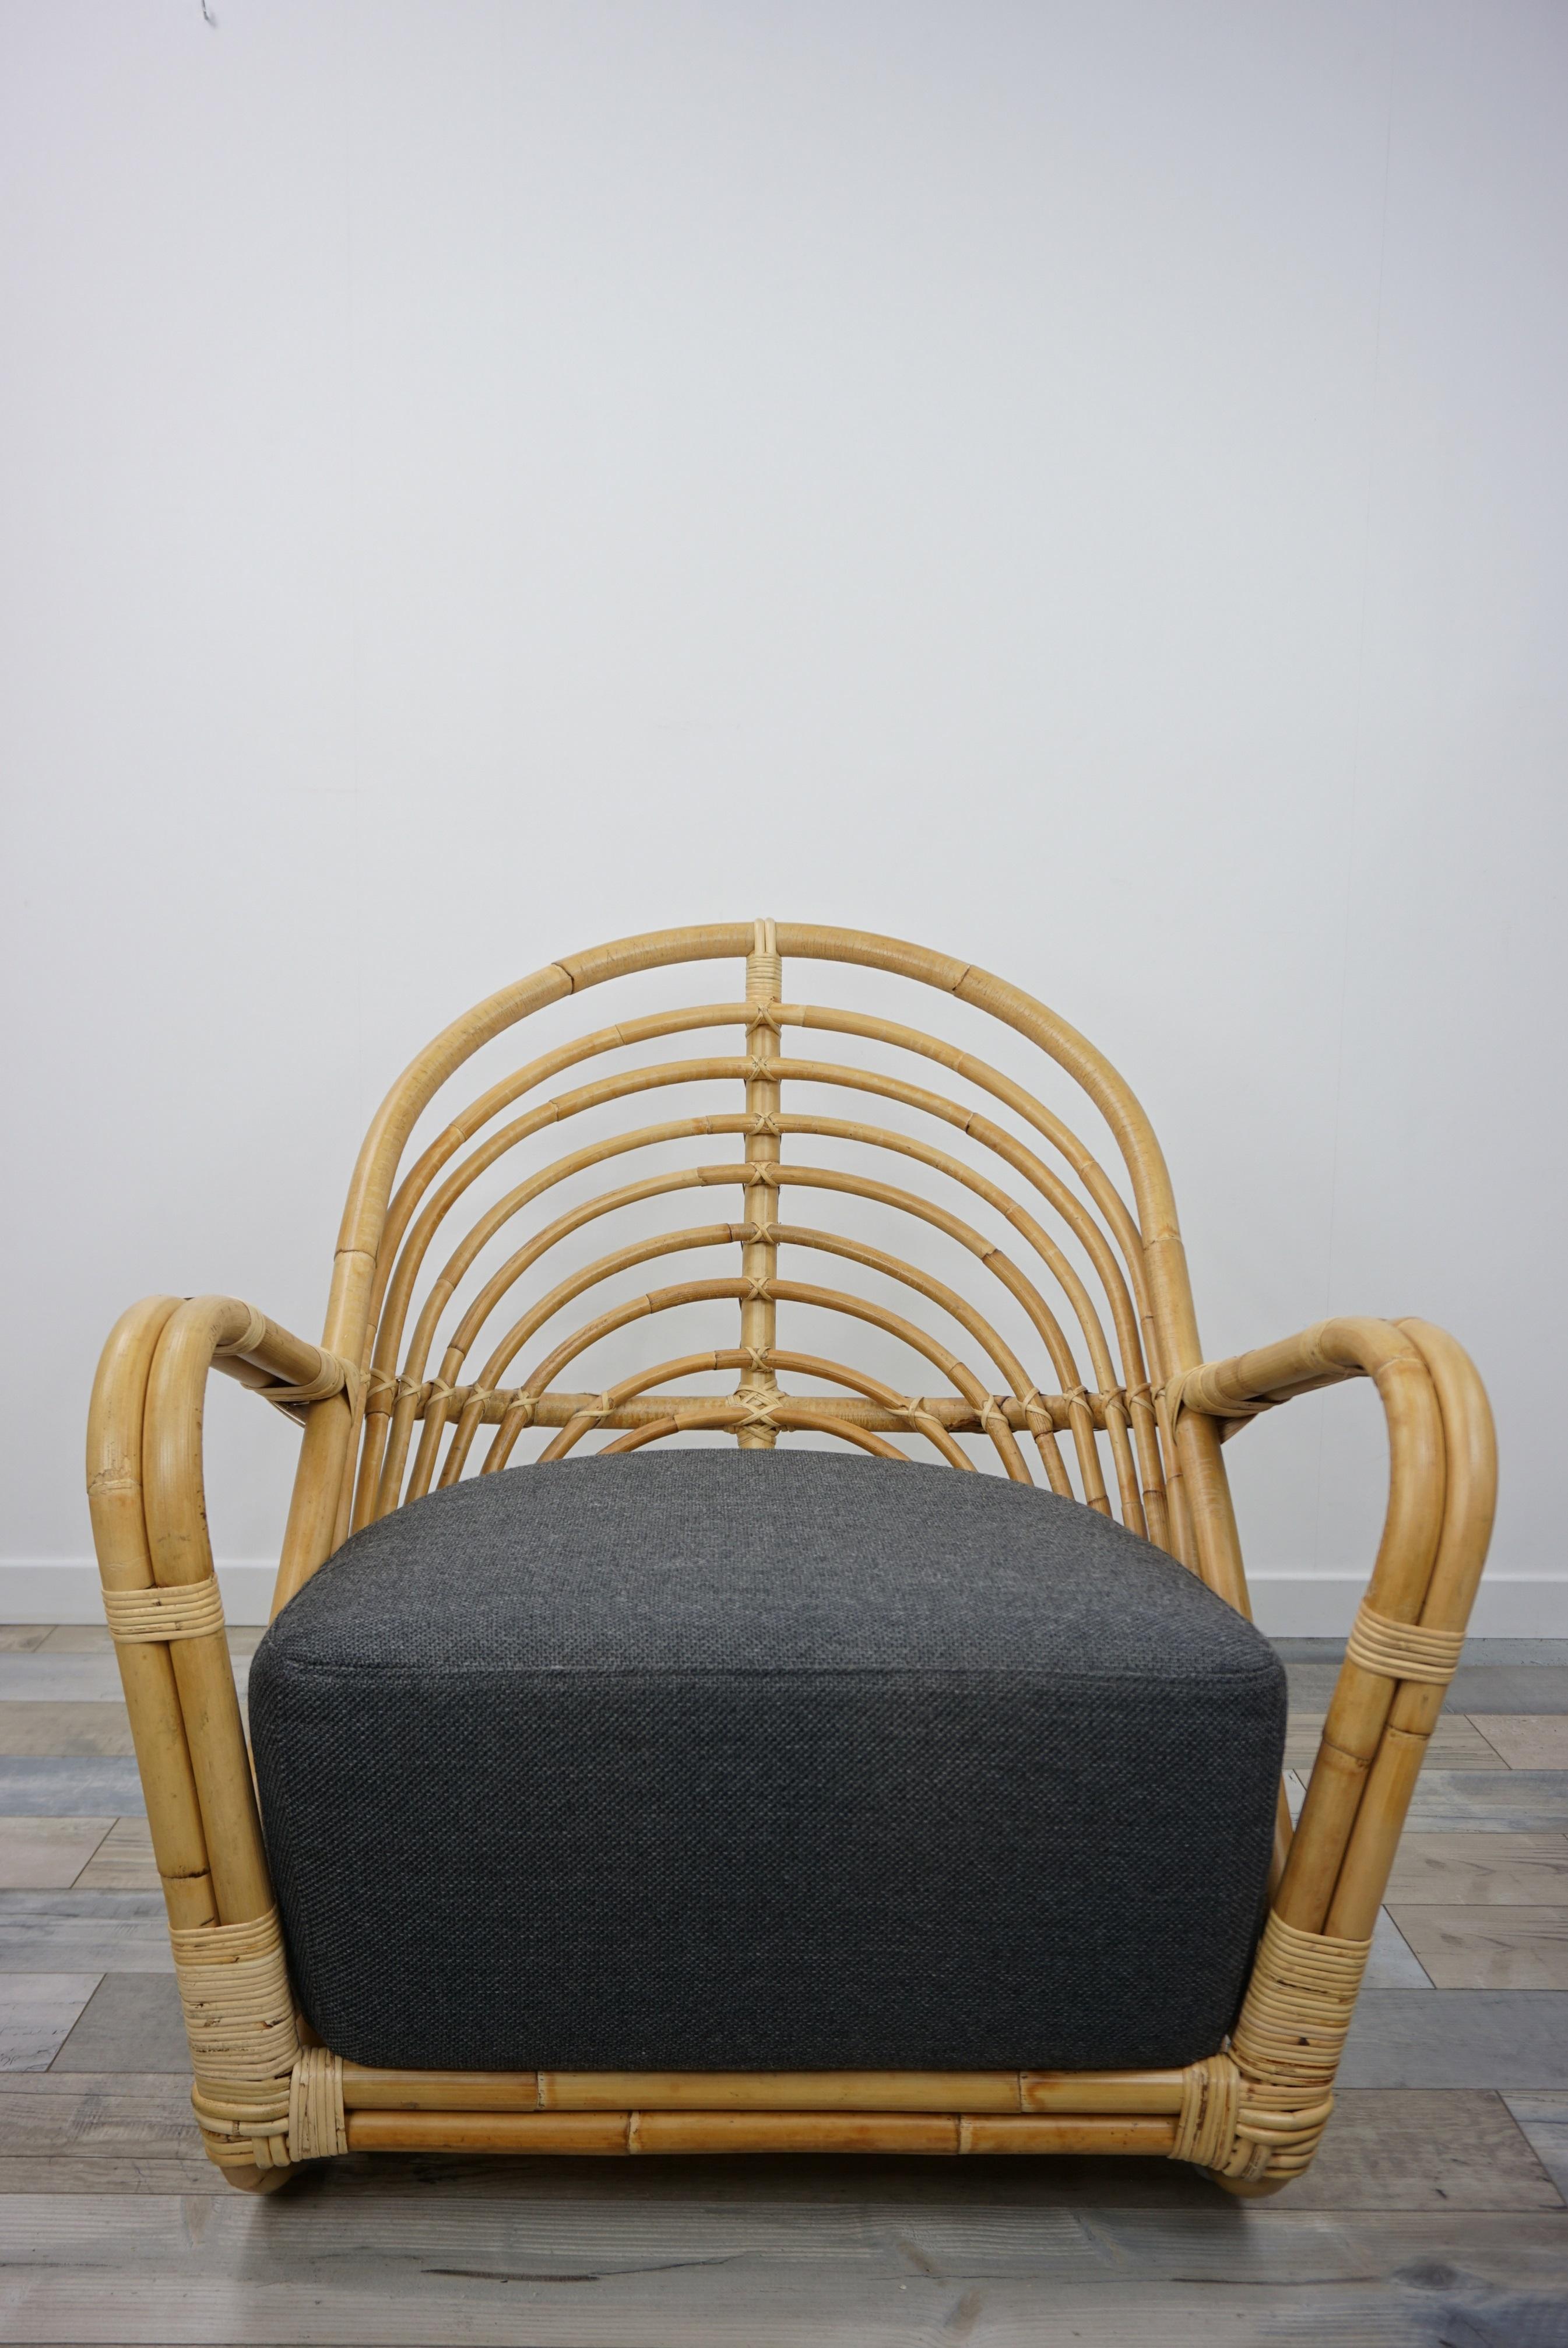 1930s Arne Jacobsen Design Rattan Lounge Armchair For Sale 3